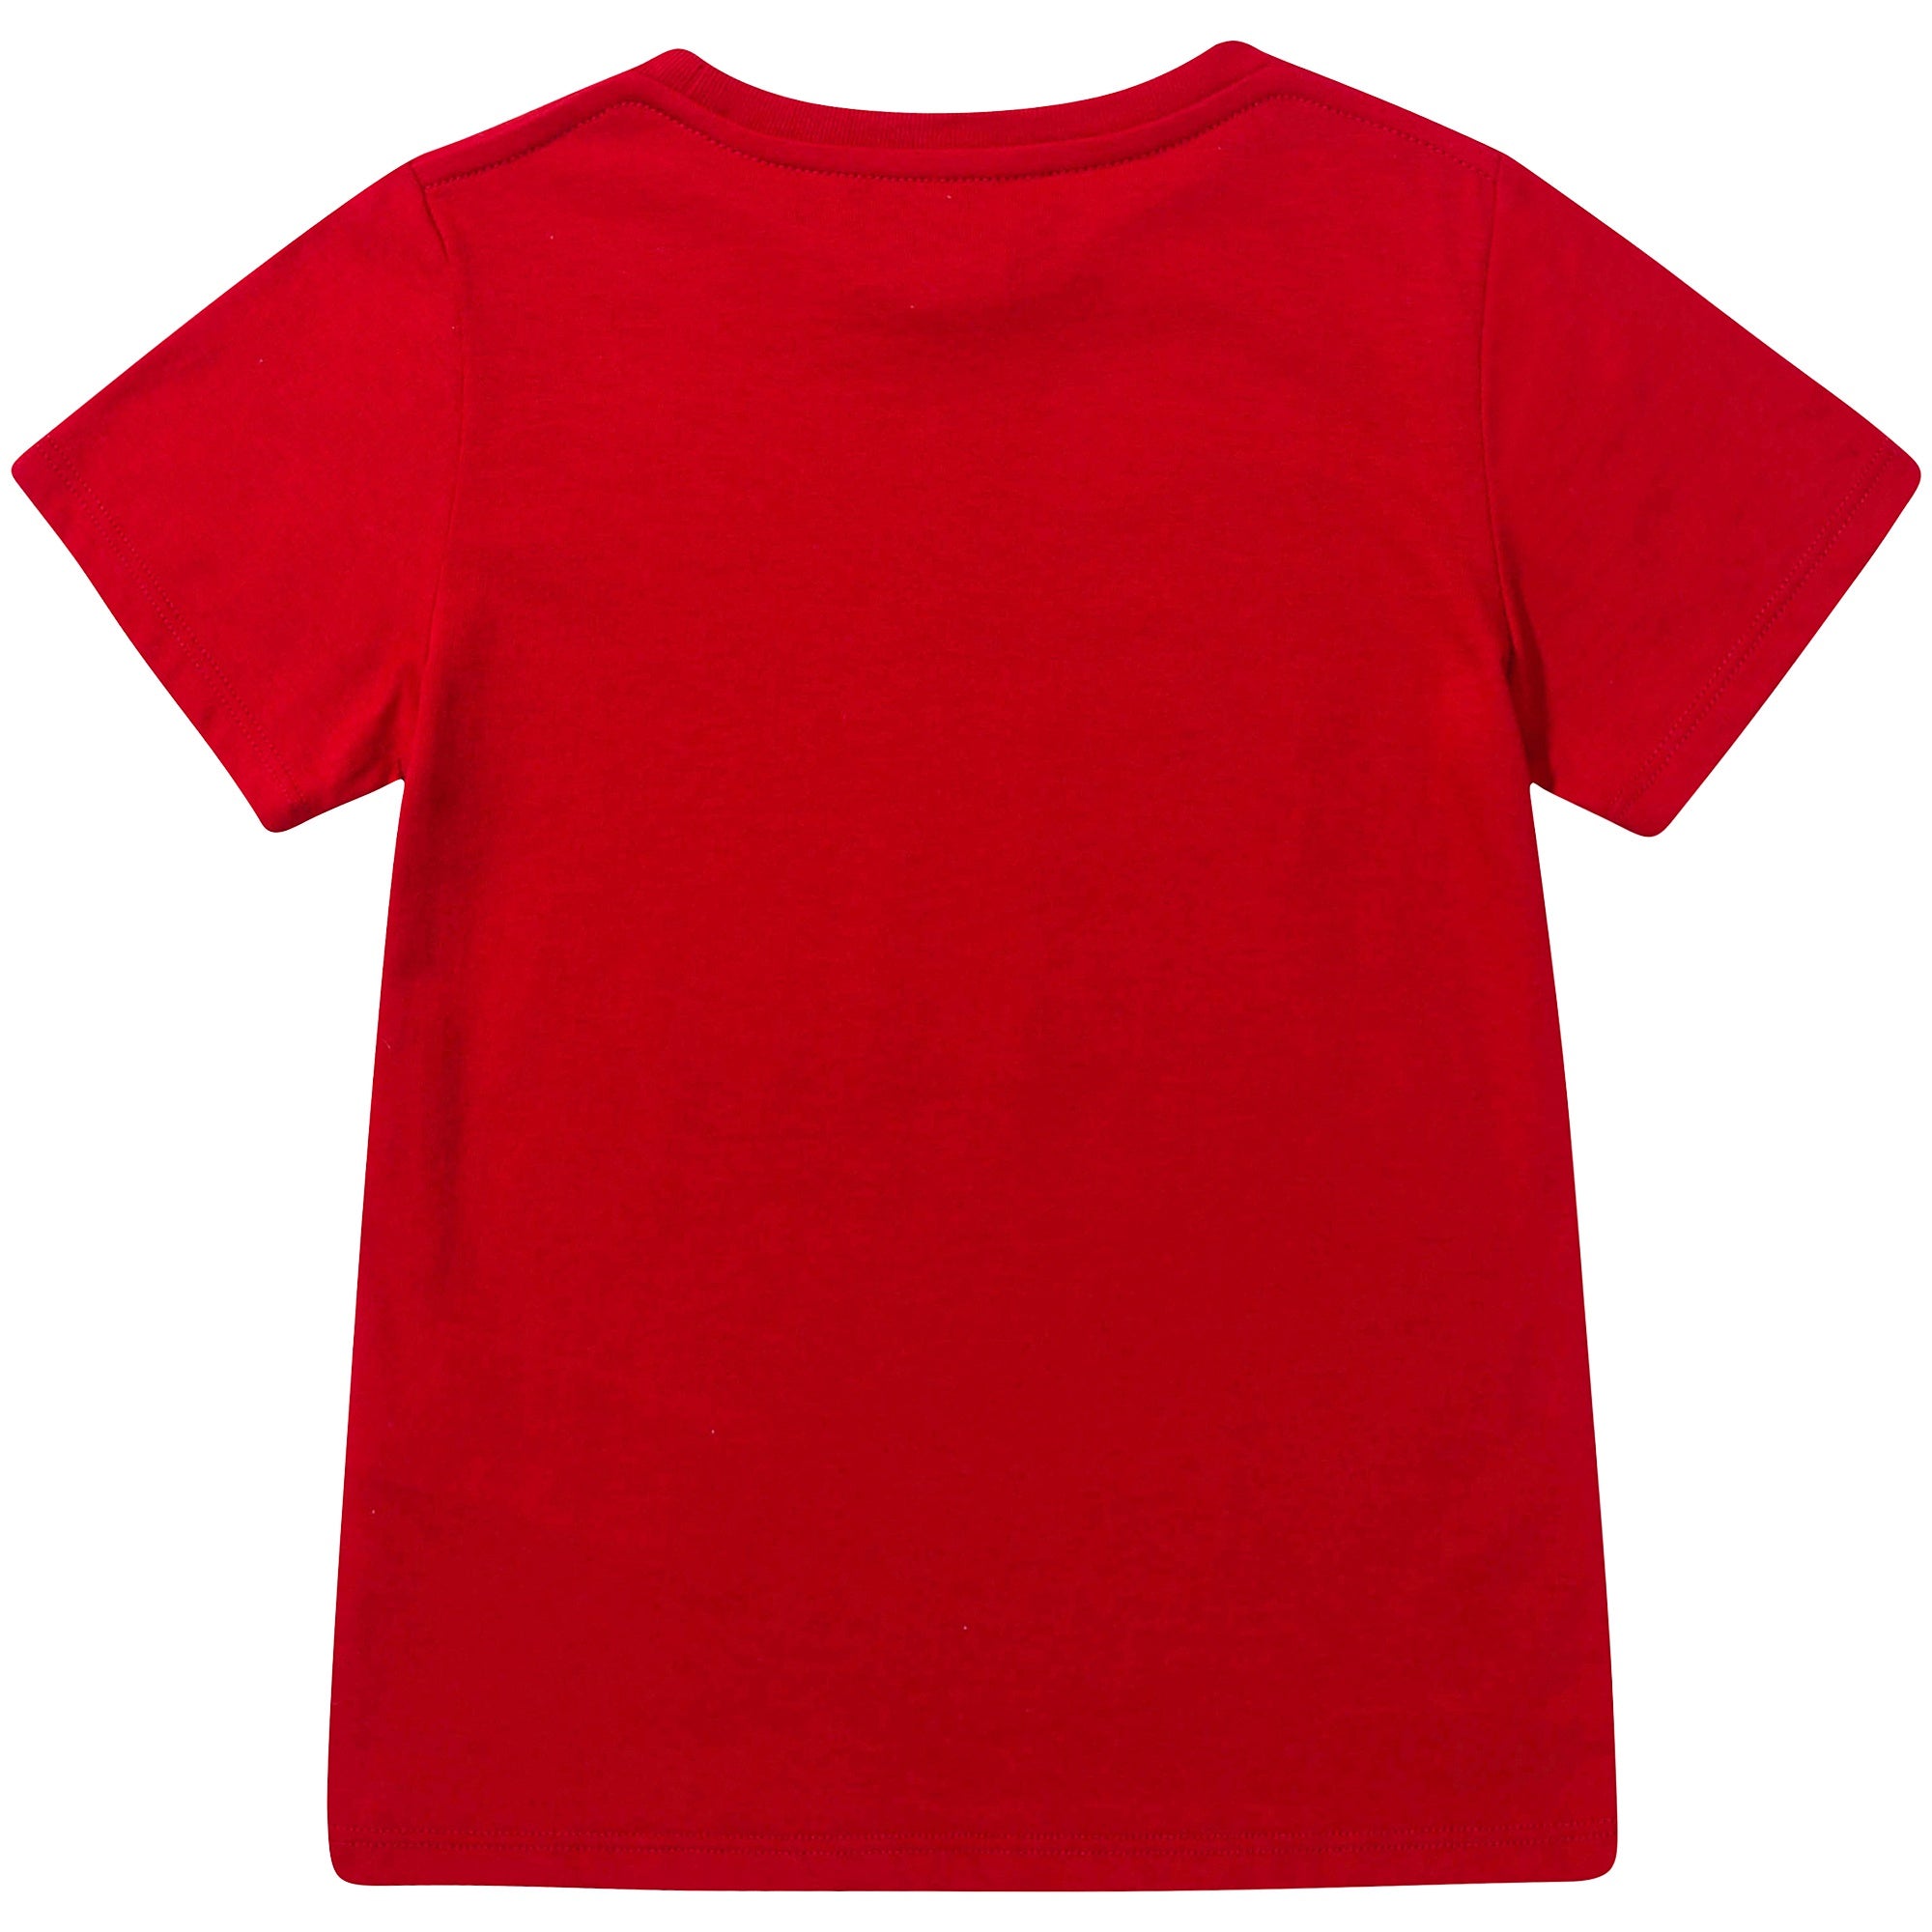 Boys Red "GG" Cotton T-shirt